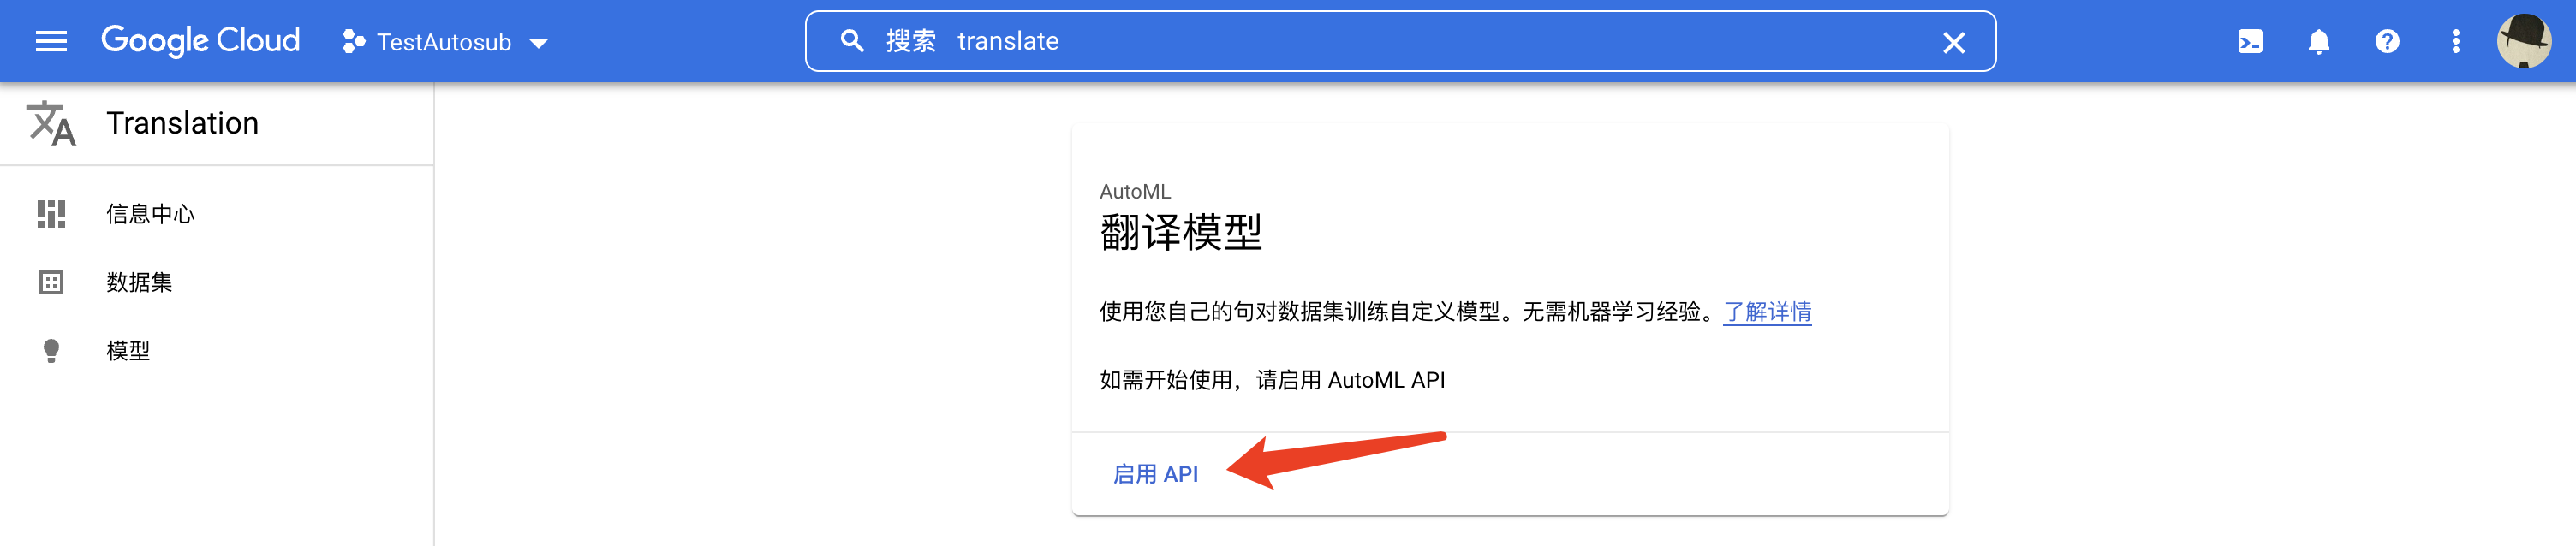 Google Translation 翻译 API